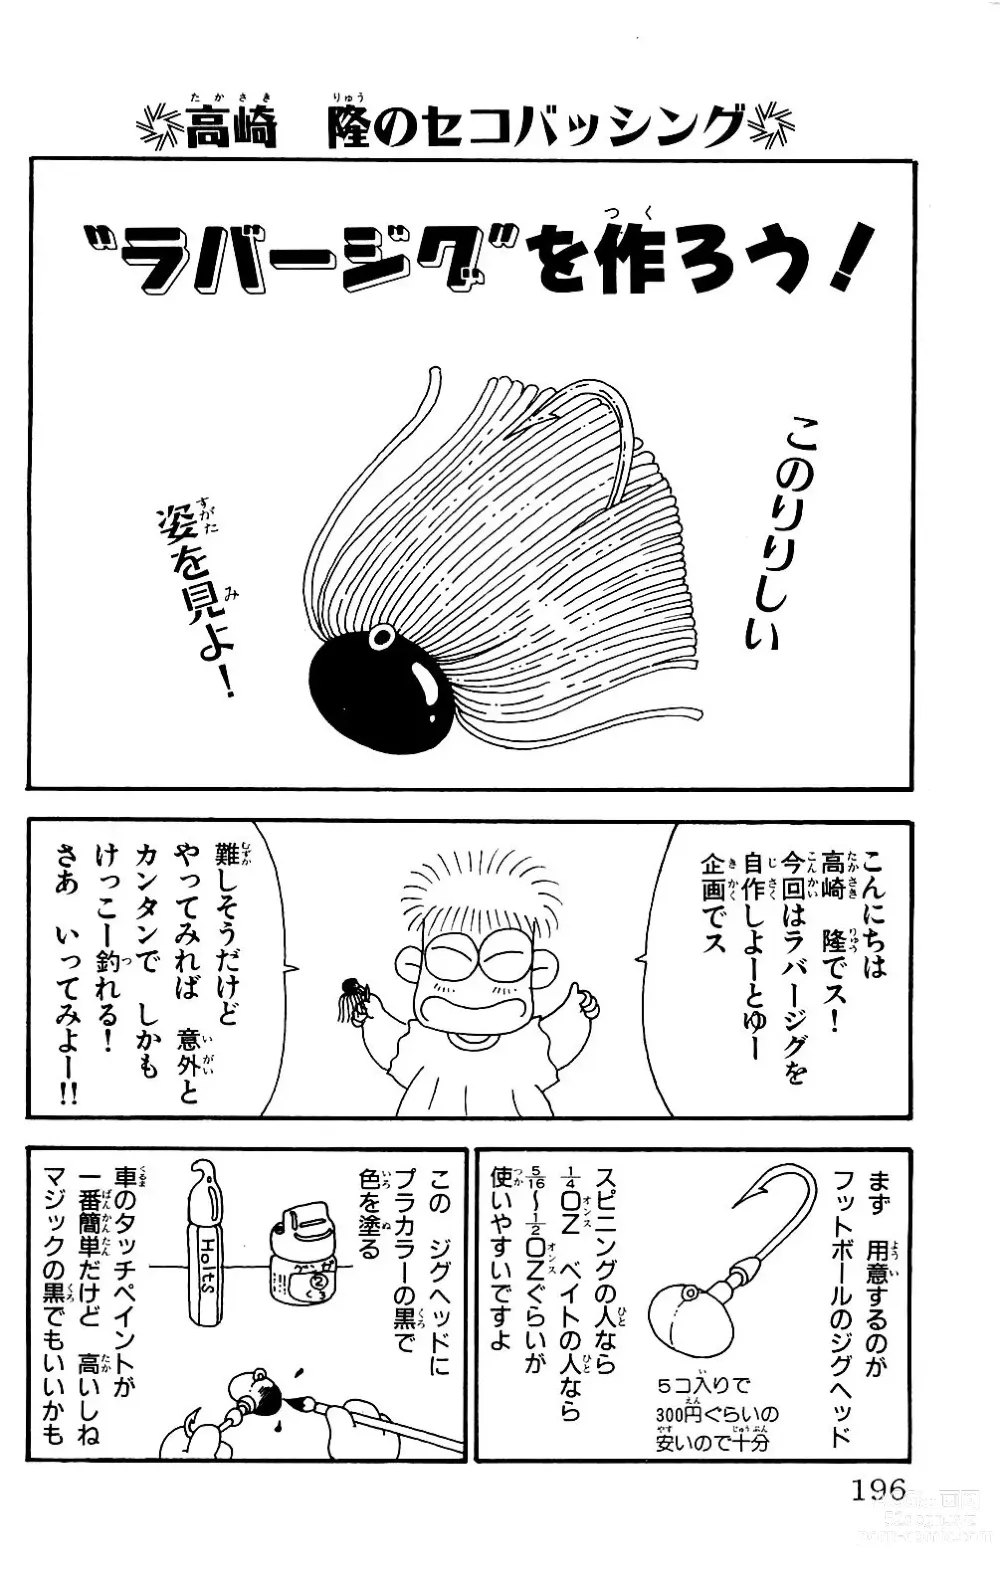 Page 194 of manga Orette Piyoritan 06